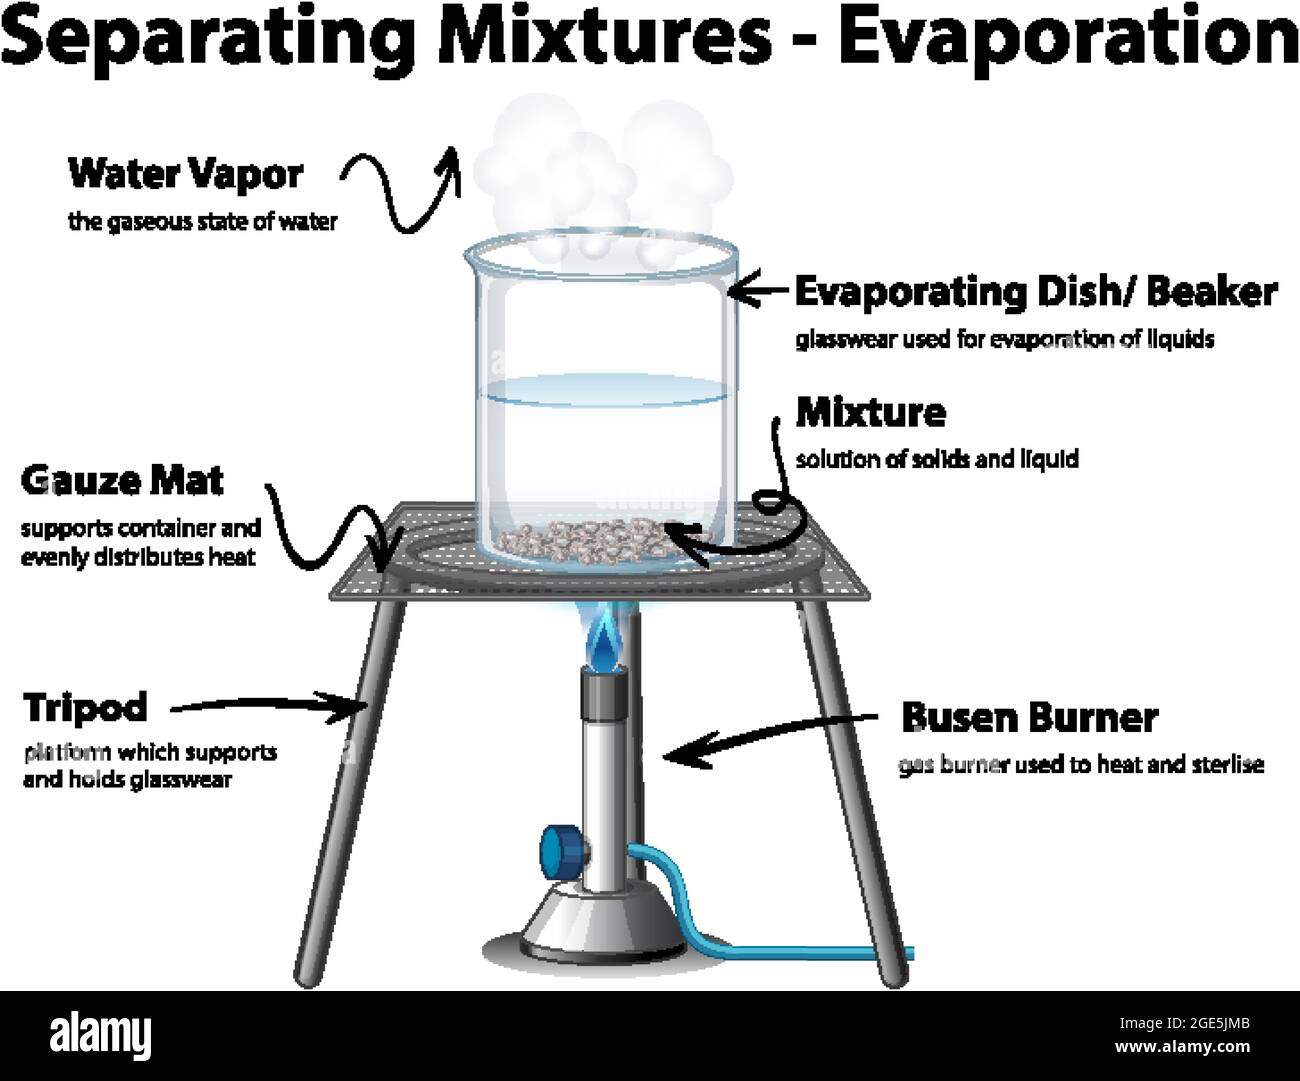 Diagram showing Evaporation Separating Mixtures illustration Stock Vector